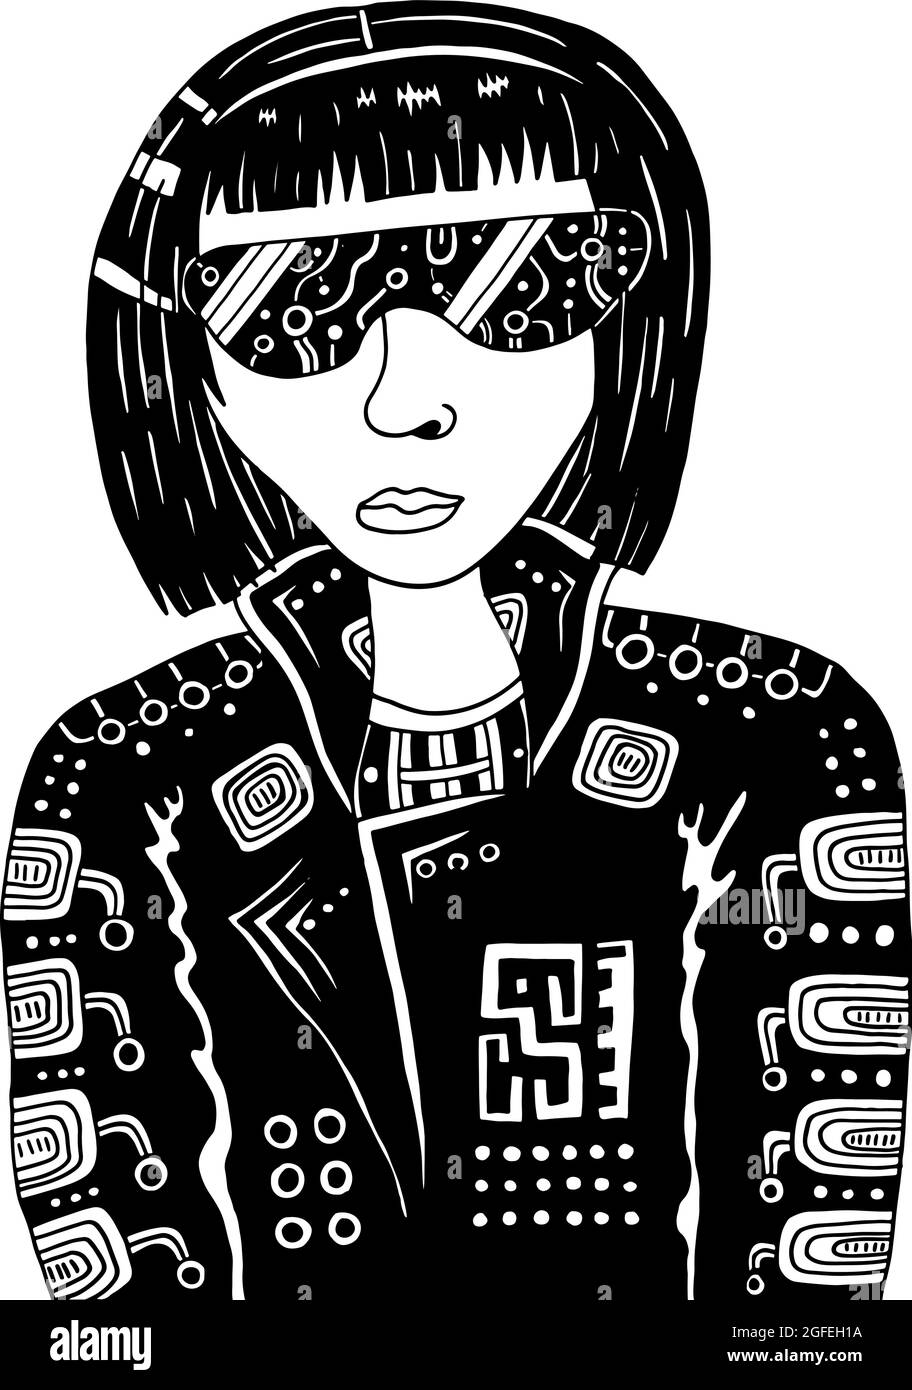 Cyberpunk girl in dark vr glasses. Cybergoth illustration. Black and white punk woman. Retrowave and vaporwave style. Vector artwork. Stock Vector